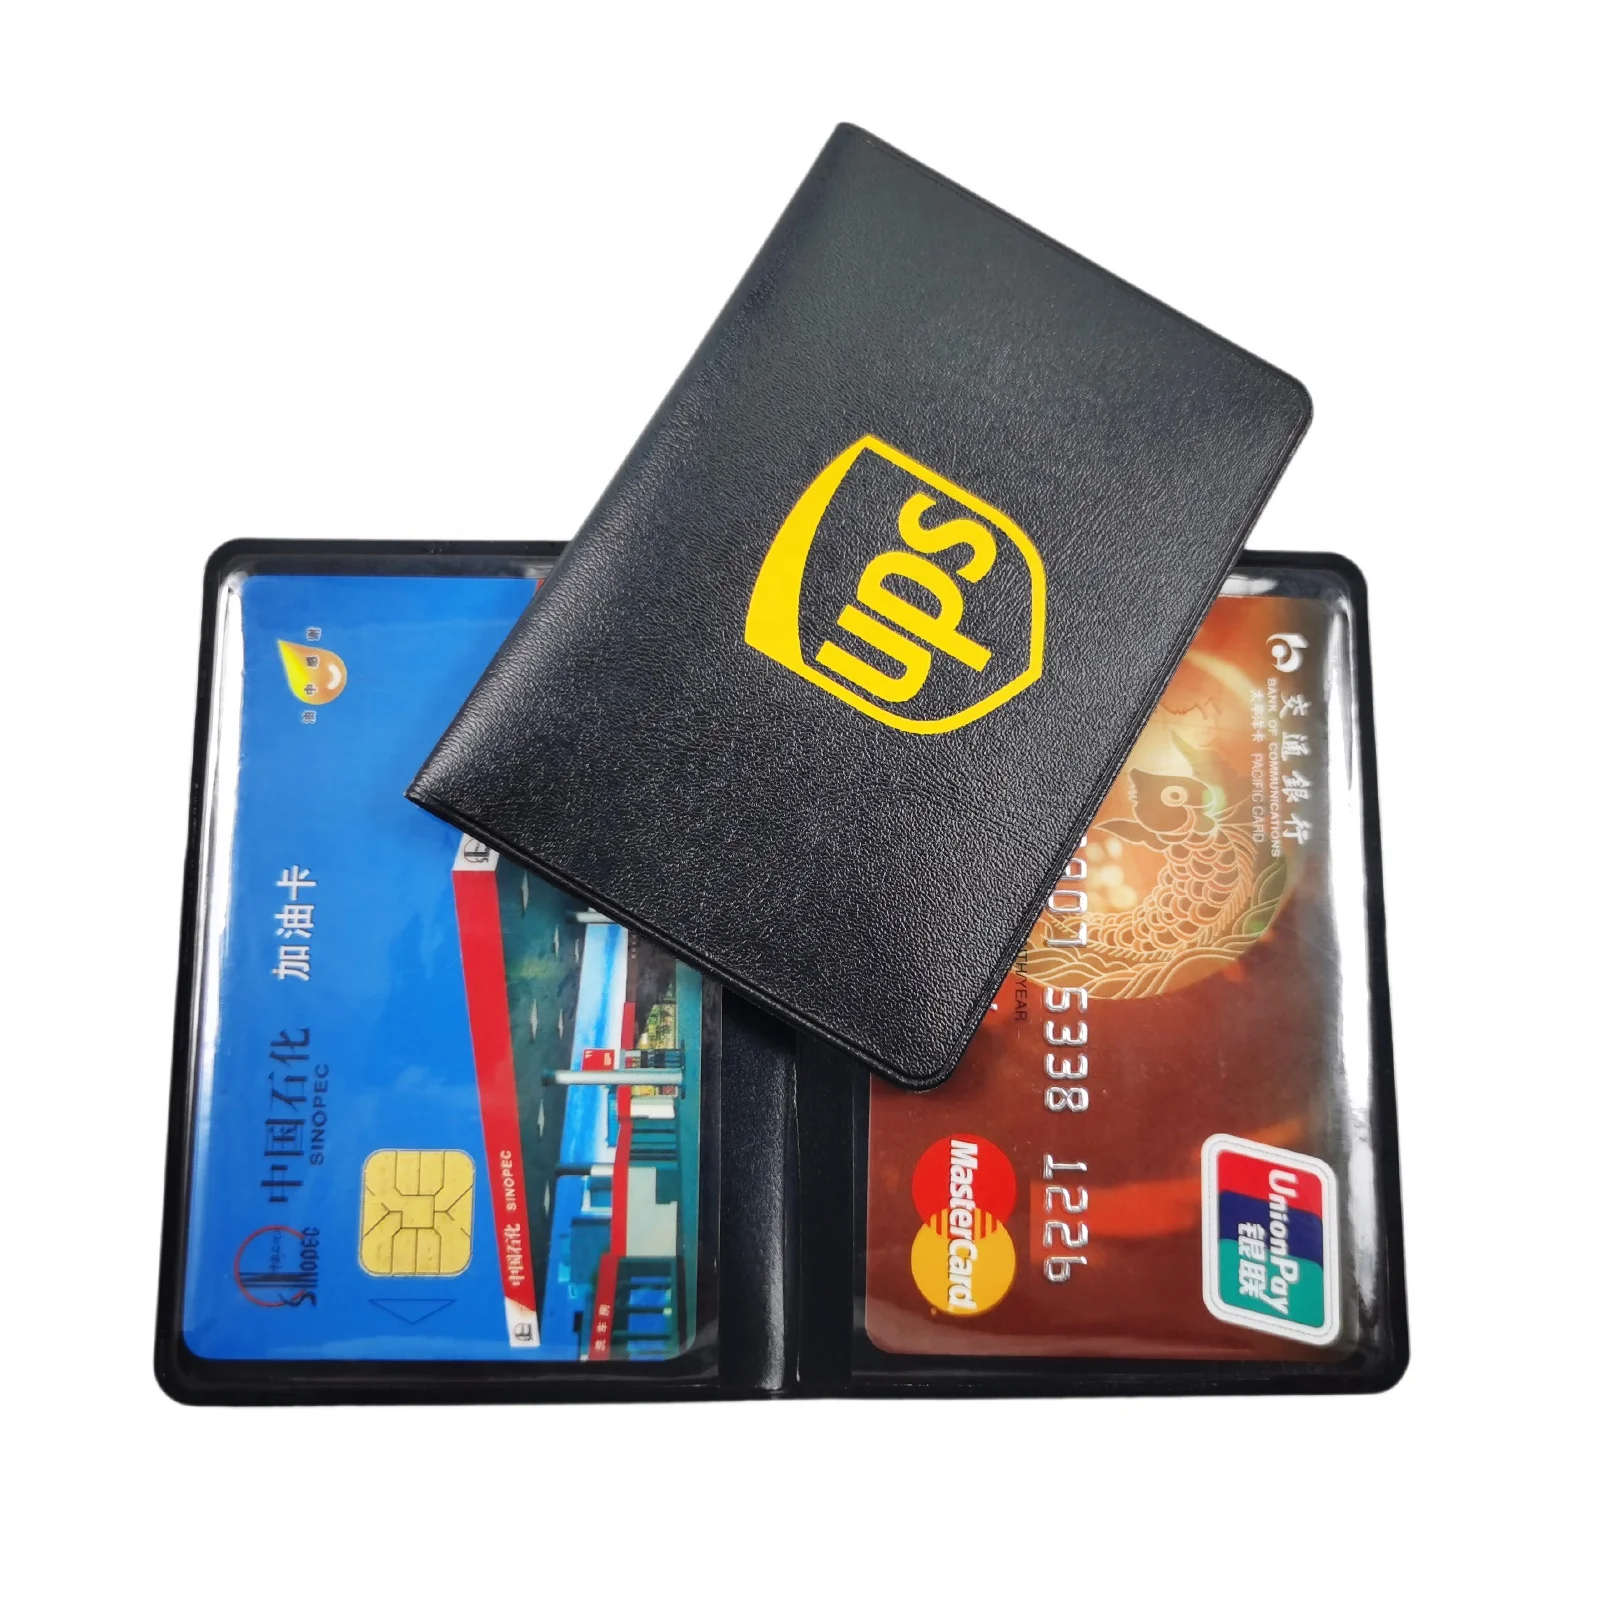 Cheap Soft Plastic Credit Card Holder,Pvc Credit Card Wallet - Buy Pvc Credit Card Holder,Pvc Credit Wallet,Plastic Credit Card Product on Alibaba.com